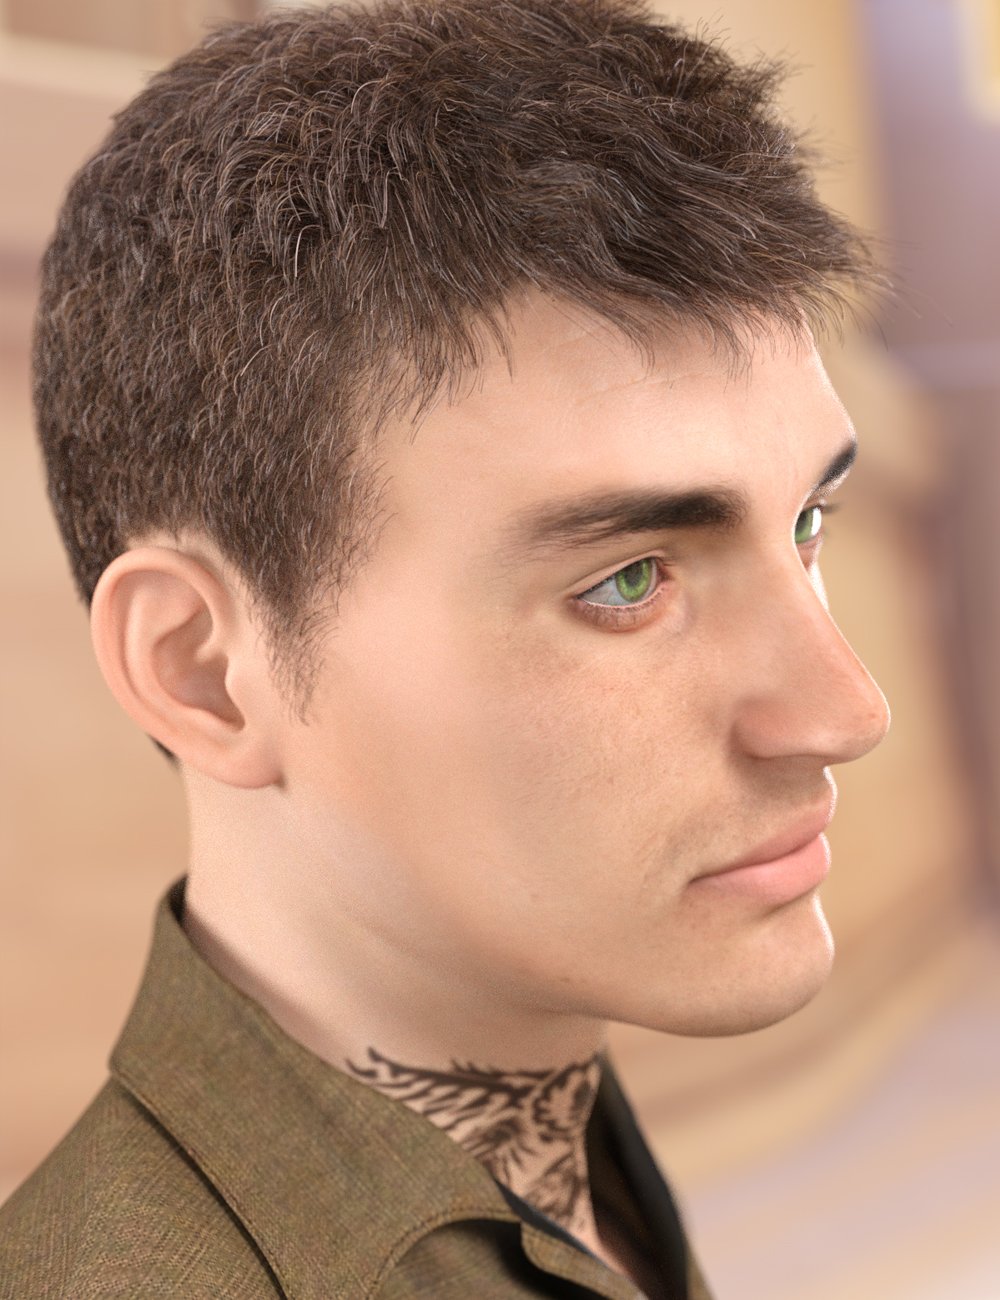 Robert for Genesis 8 Male by: VincentXyooj, 3D Models by Daz 3D